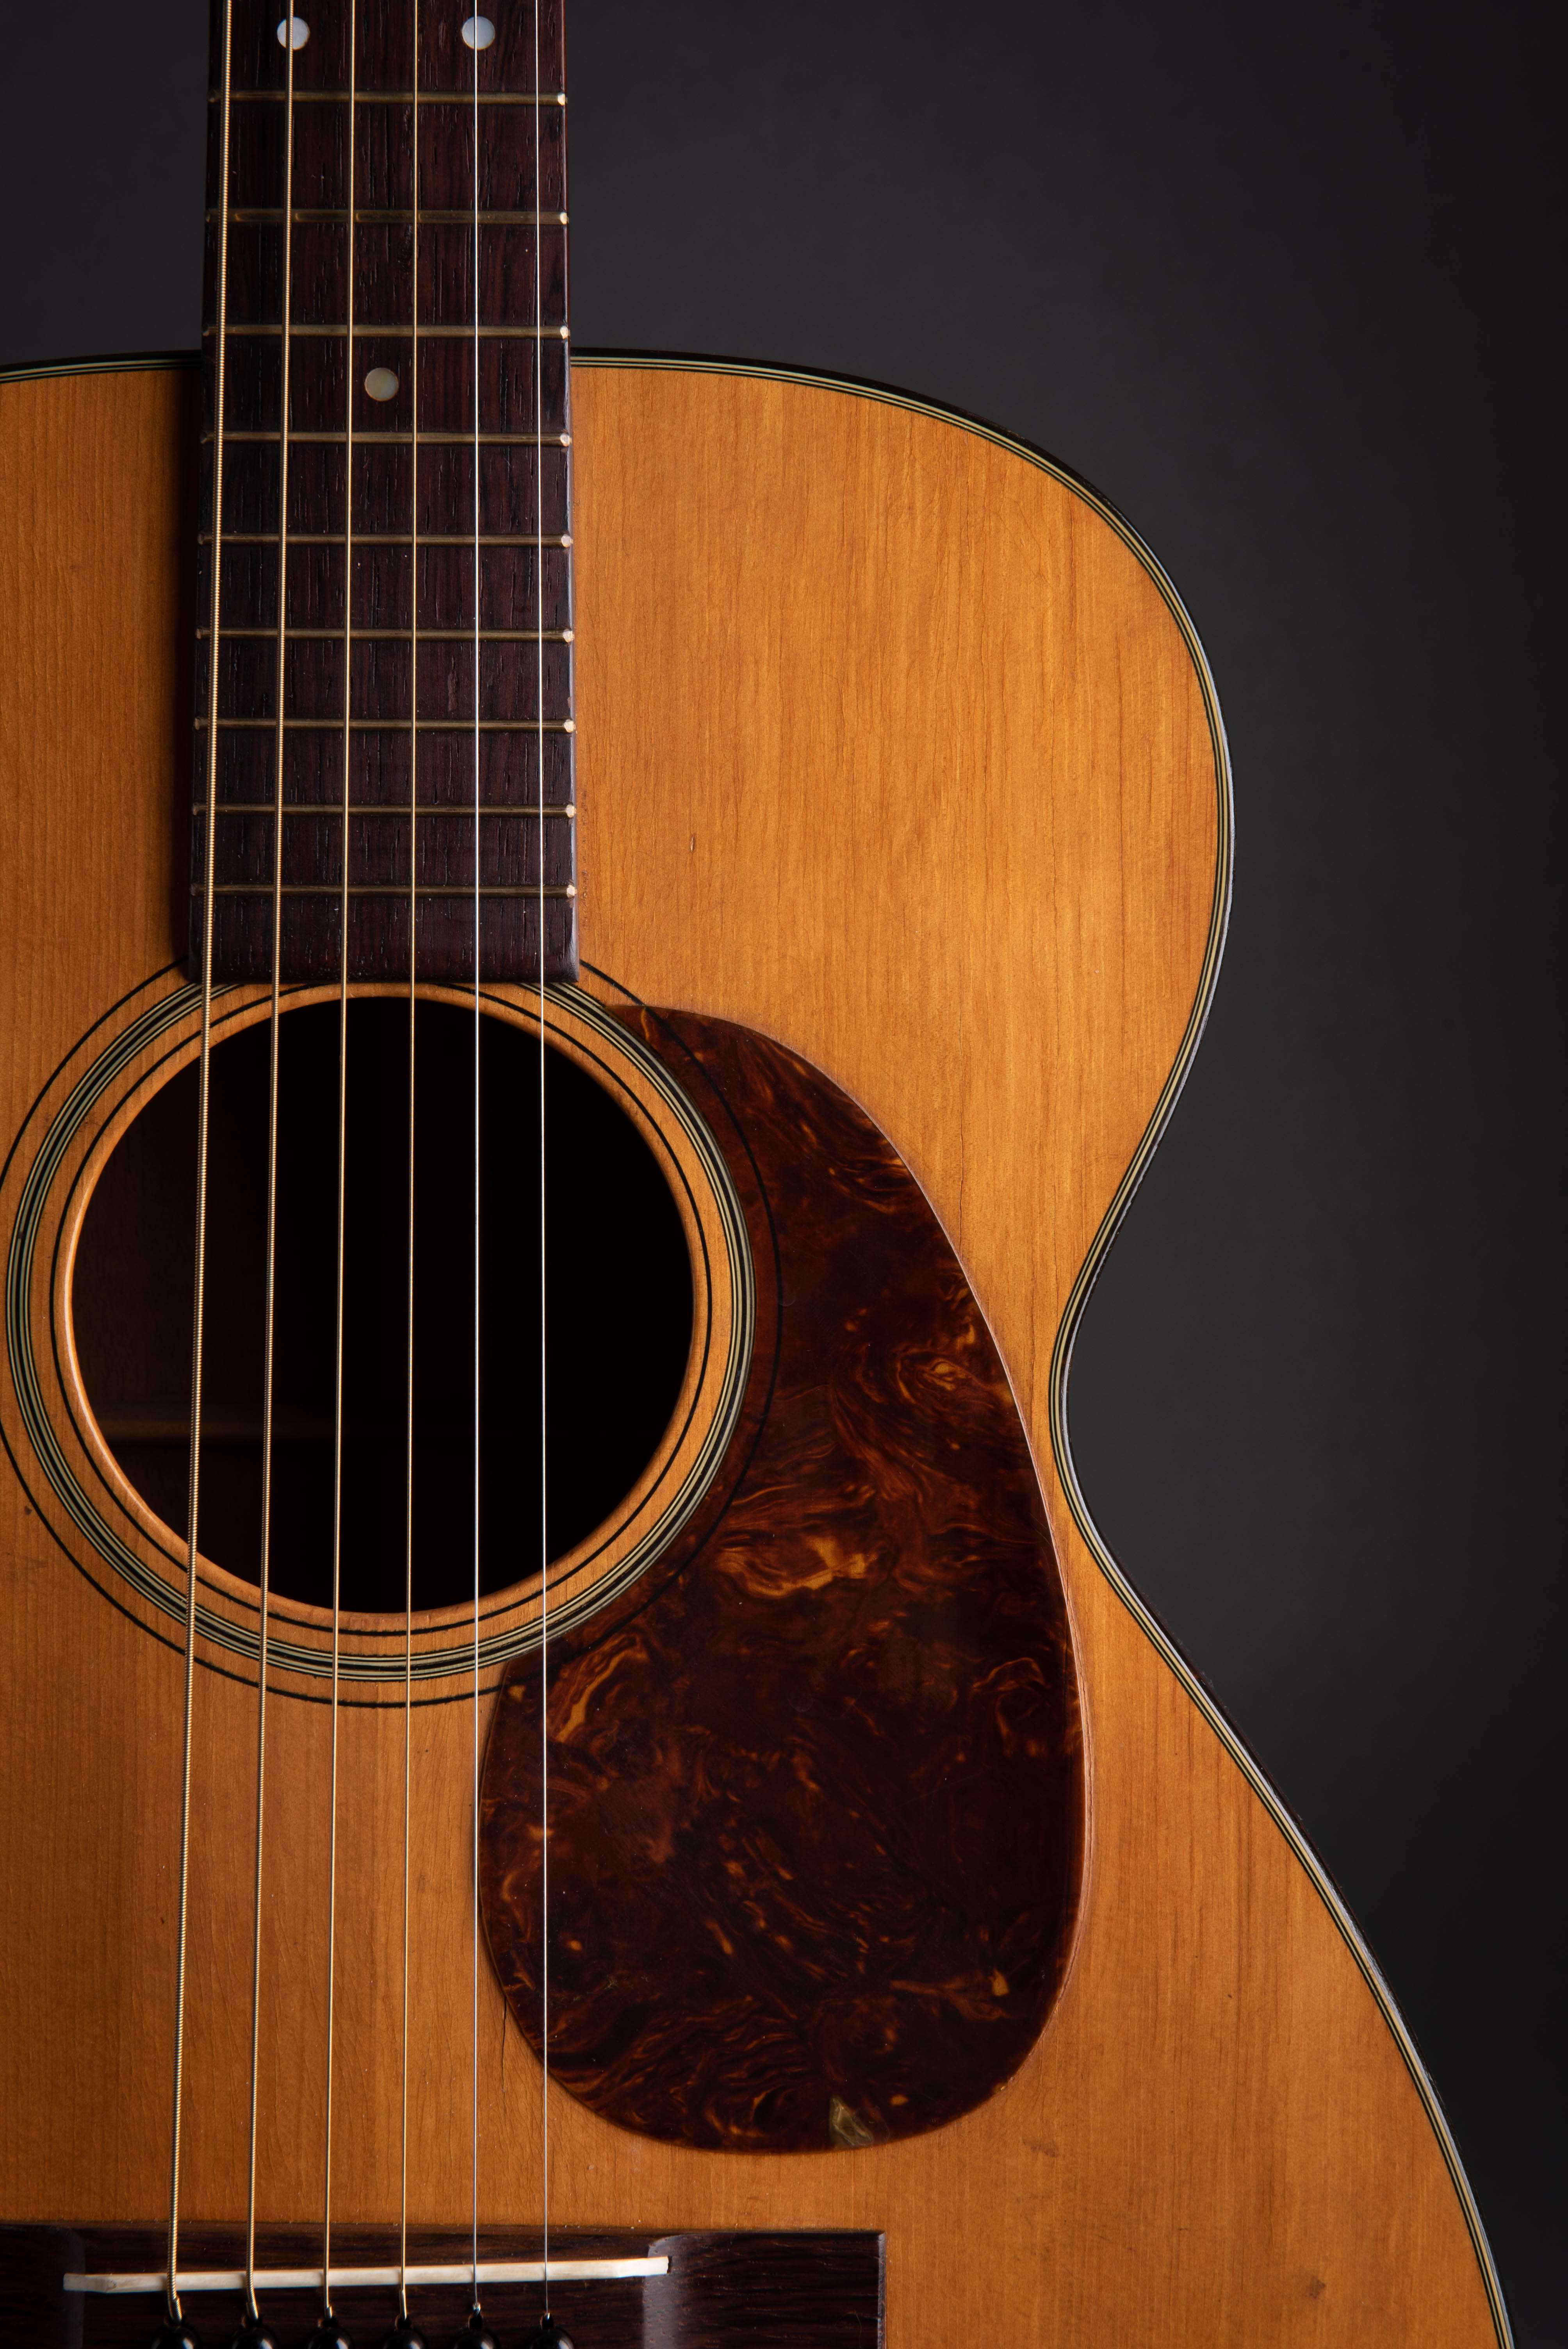 1945 Martin 0-18 Acoustic Guitar